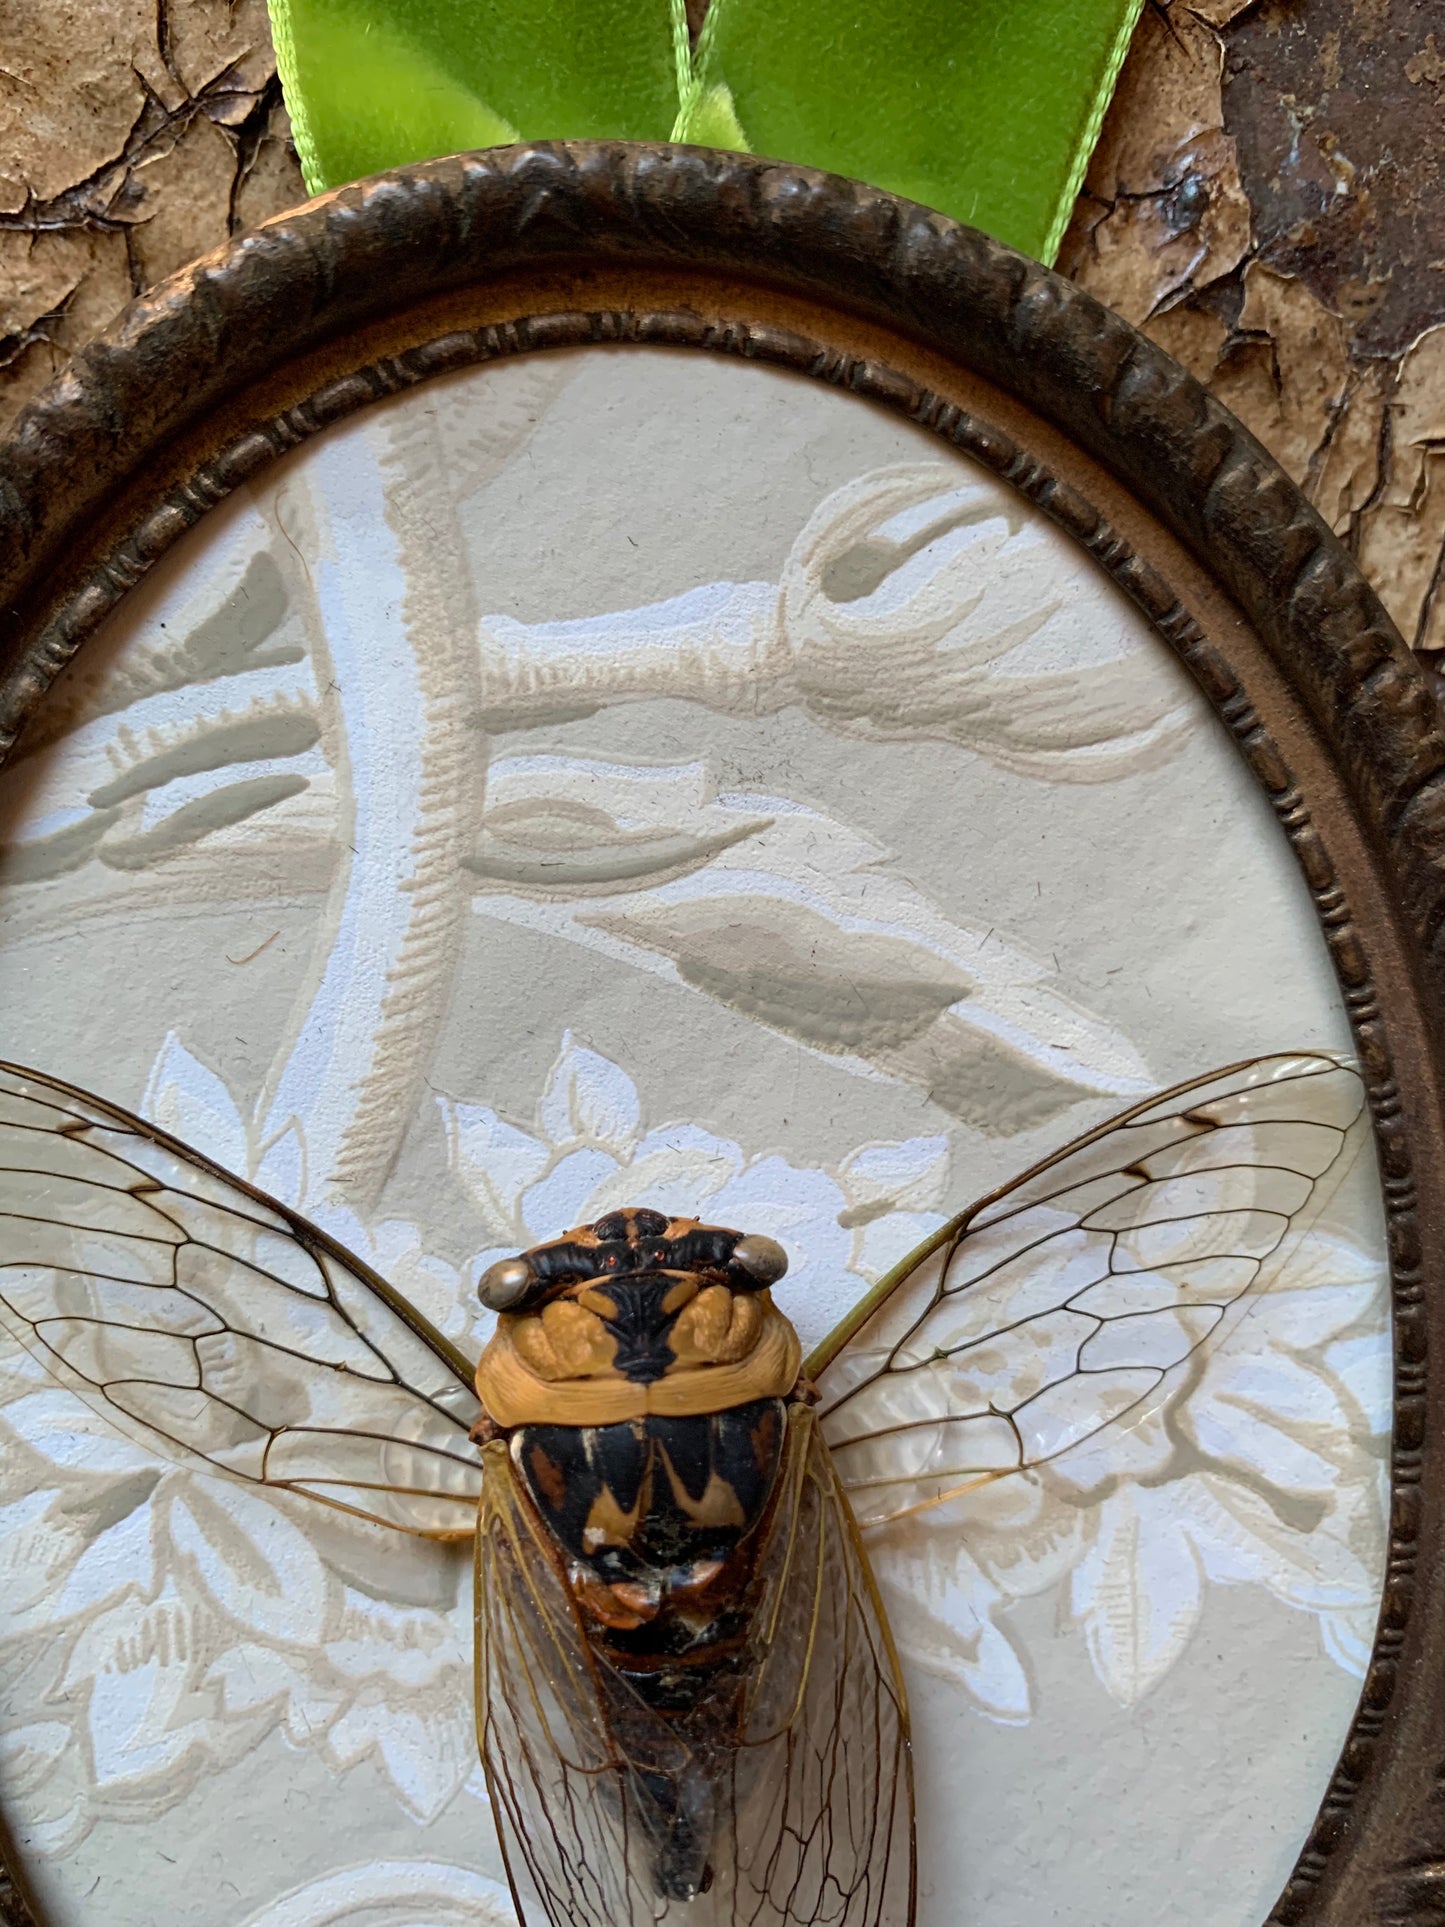 Framed cicada specimen